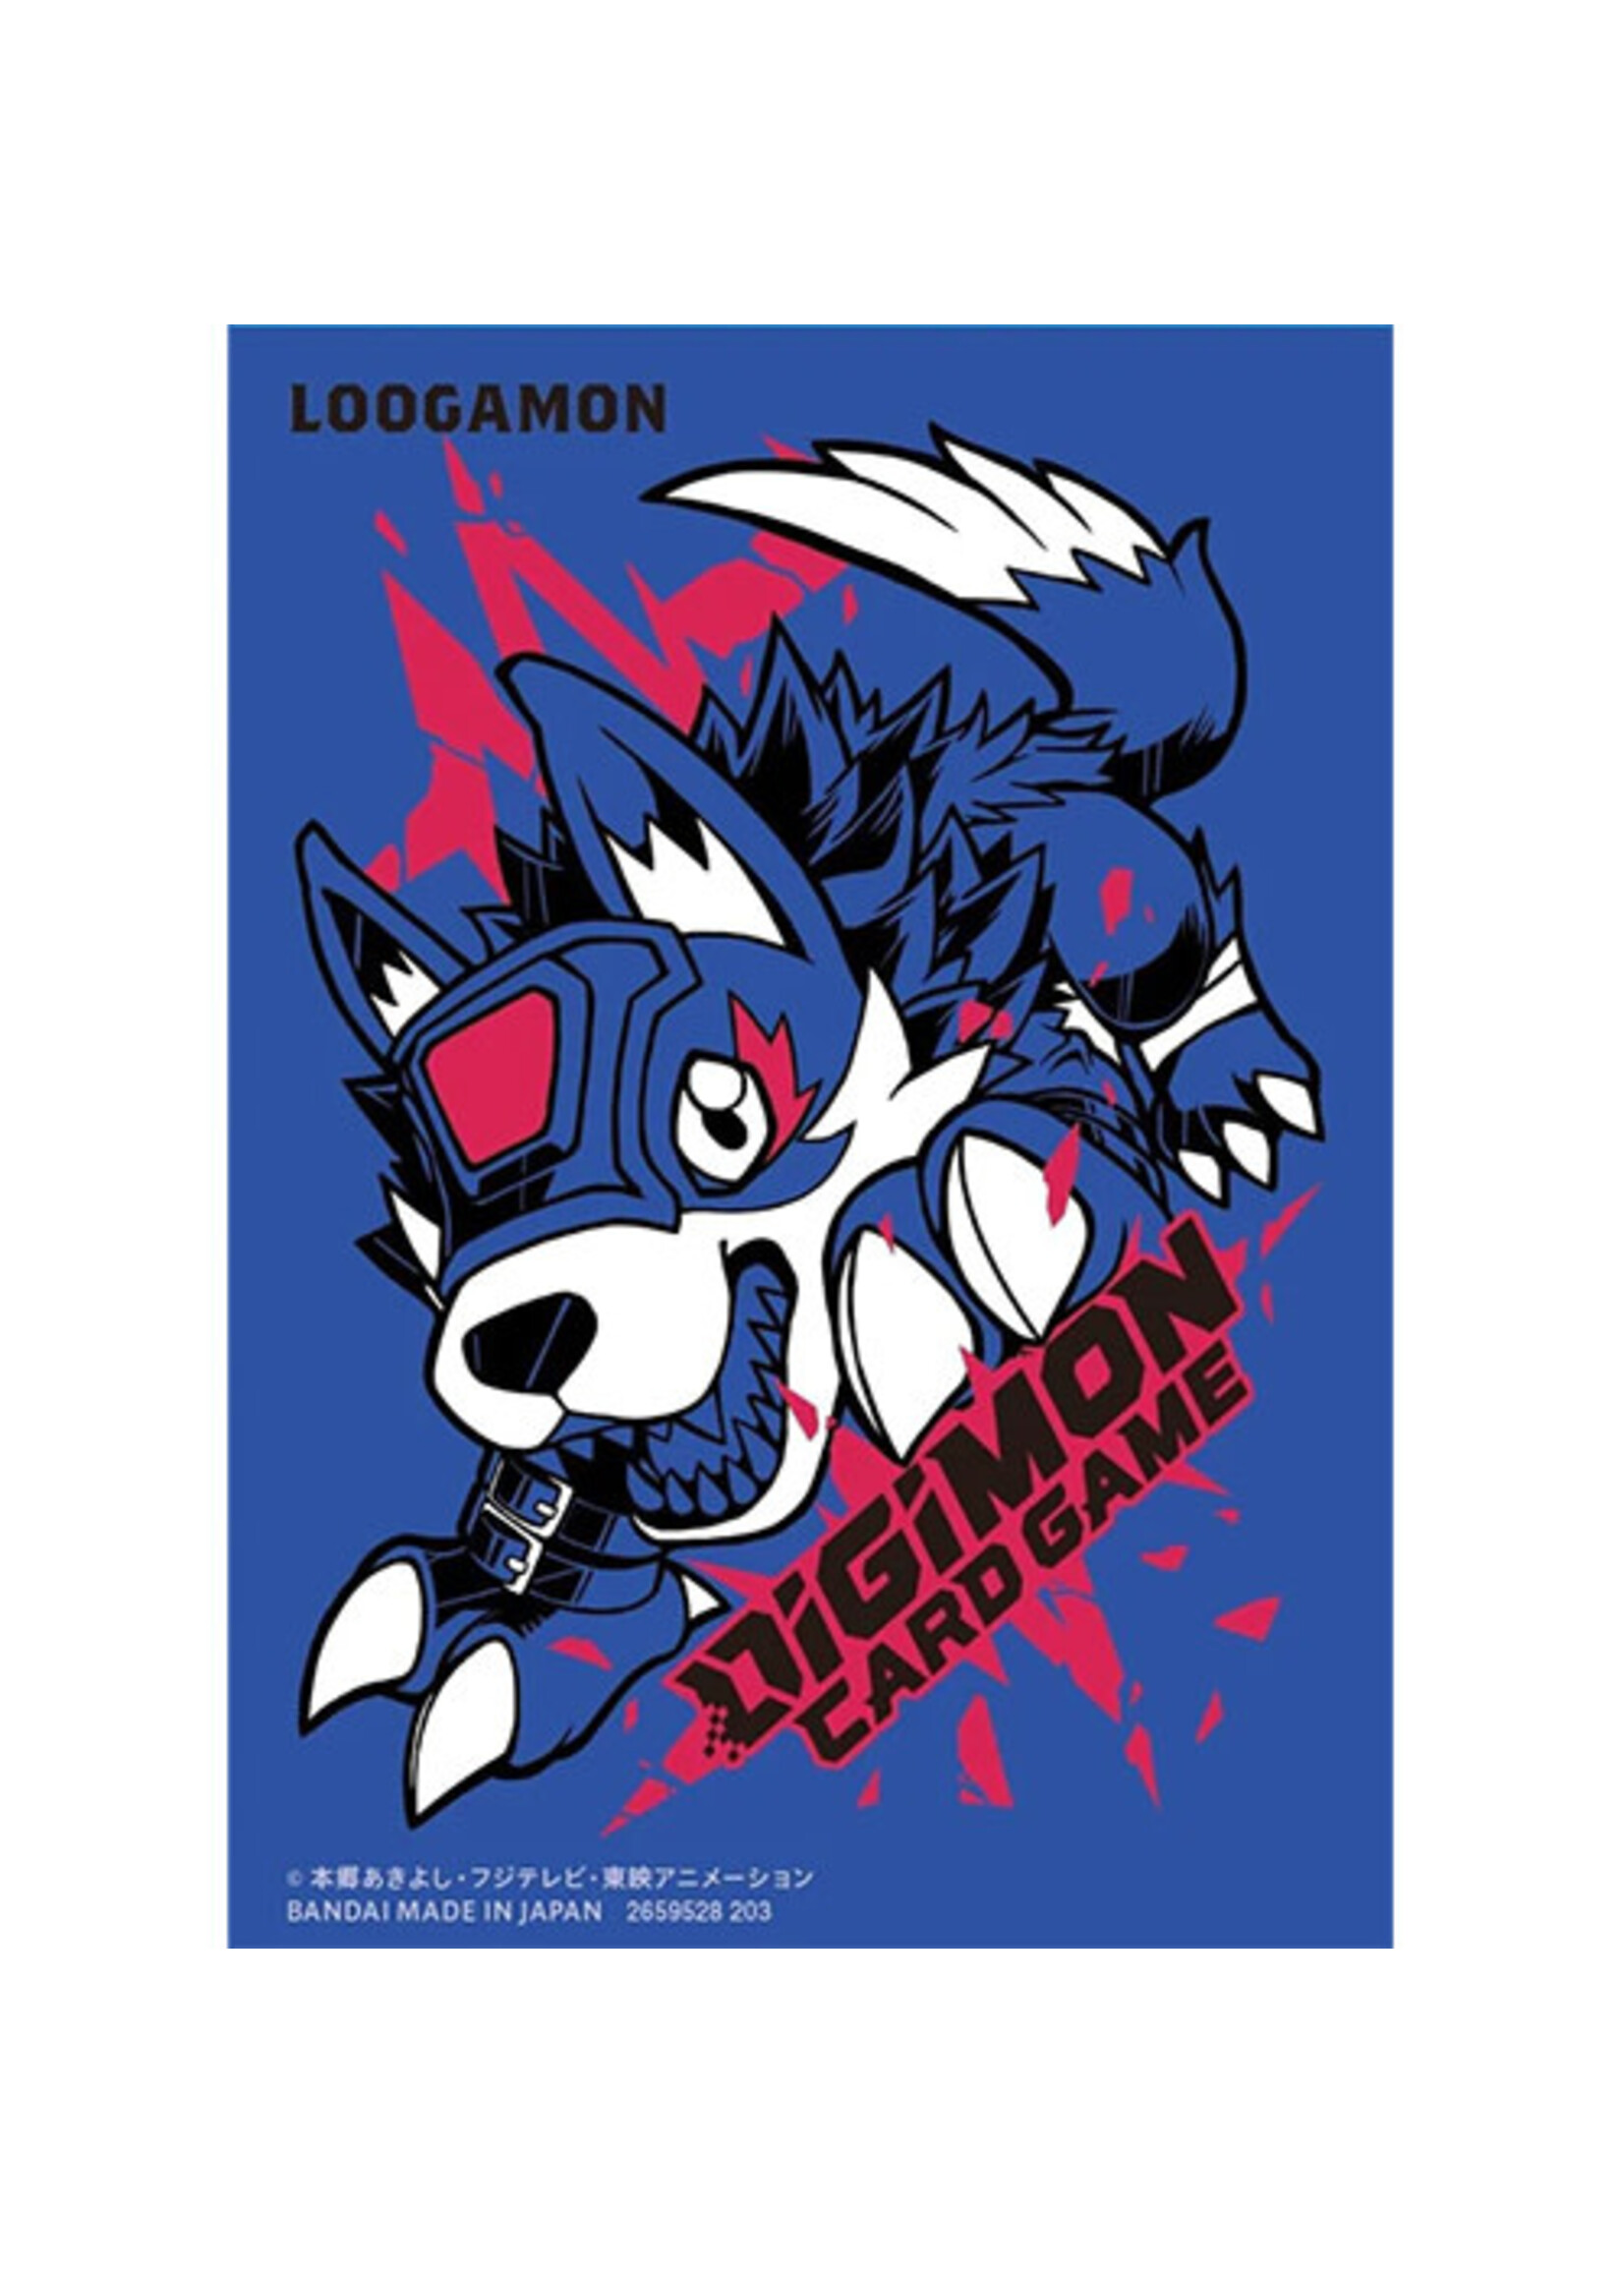 BANDAI Digimon TCG: Official Sleeves Set 2 - Loogamon